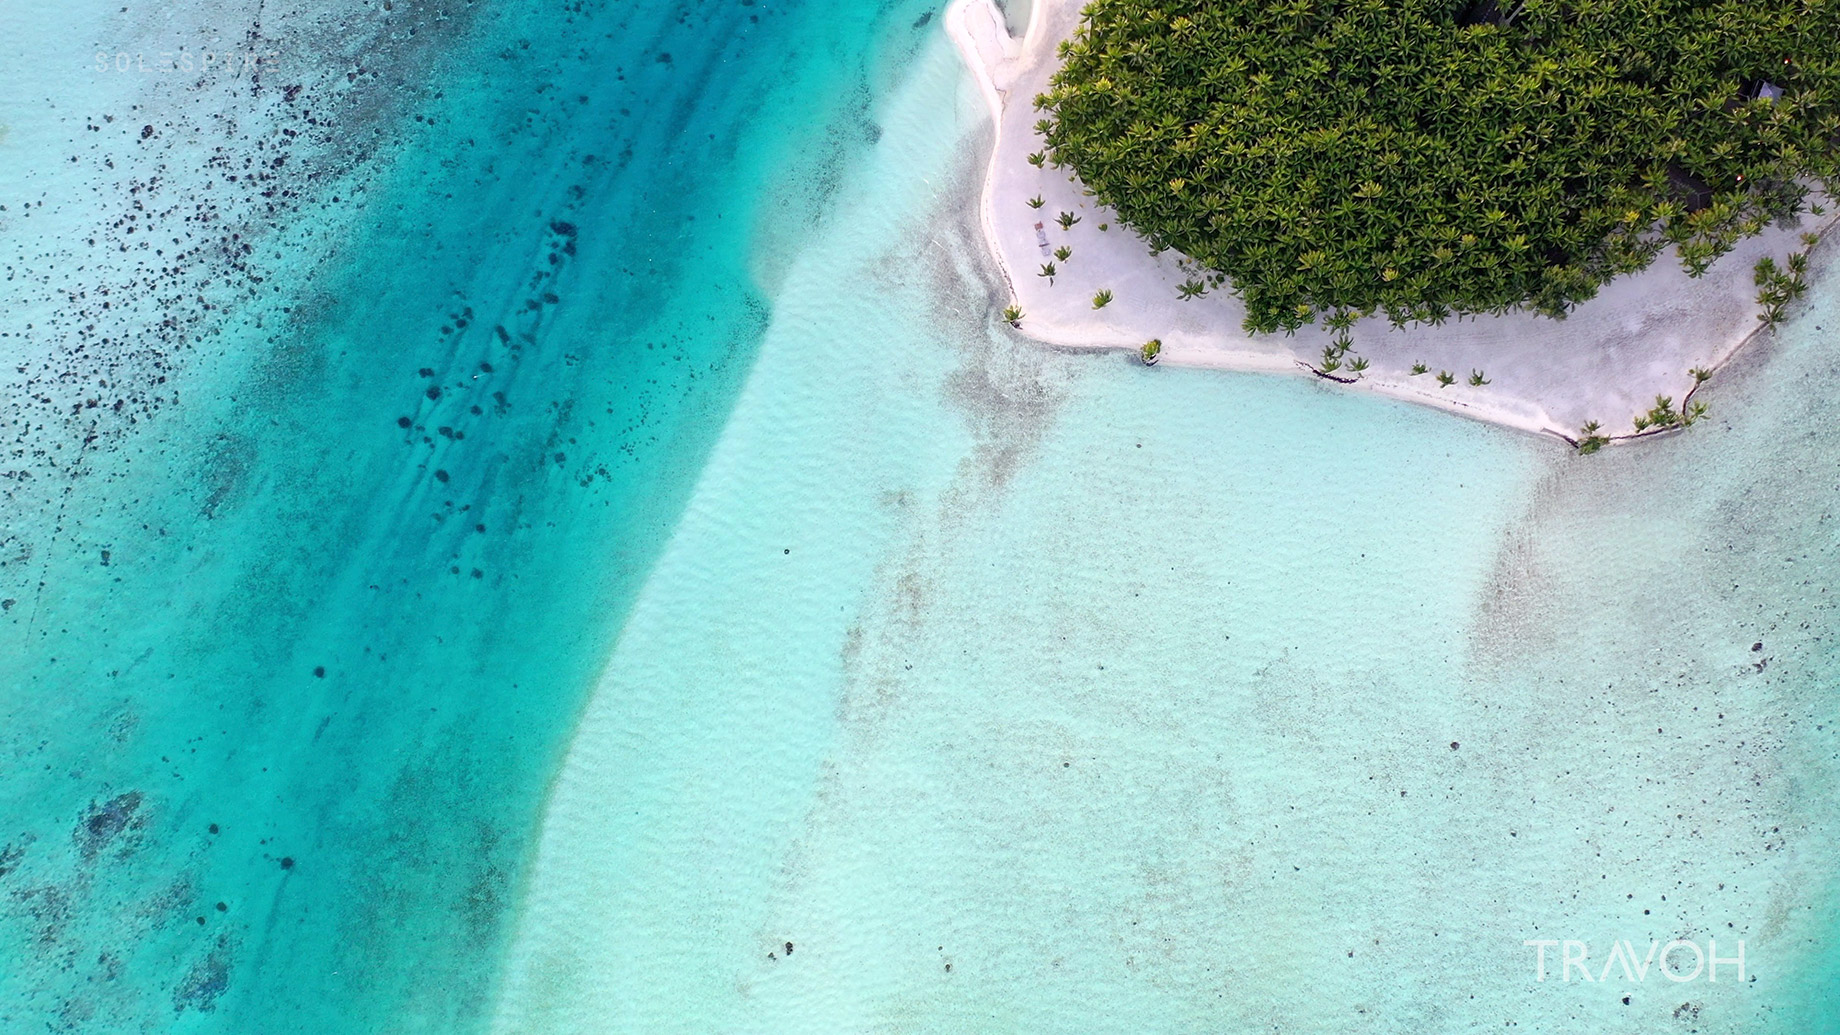 Earth's Ambient Beauty from the Sky - Motu Tane Island - Bora Bora, French Polynesia - 4K Travel Video